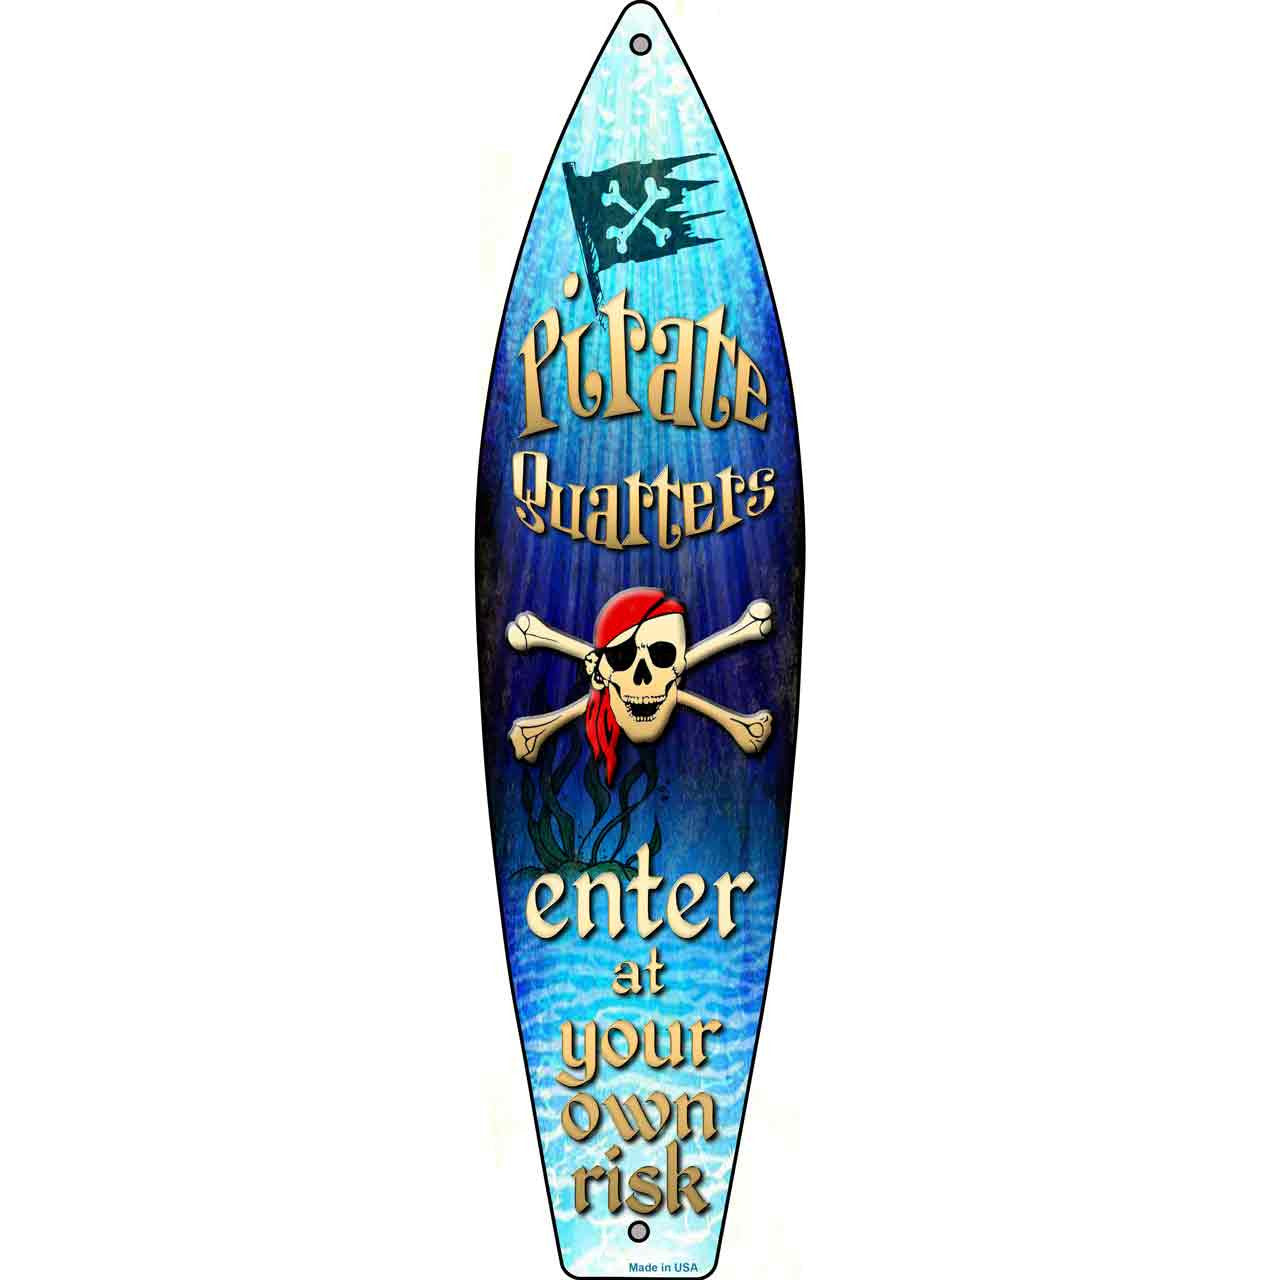 Pirate Quarters 17" x 4.5" Metal Novelty Surfboard Sign SB-037